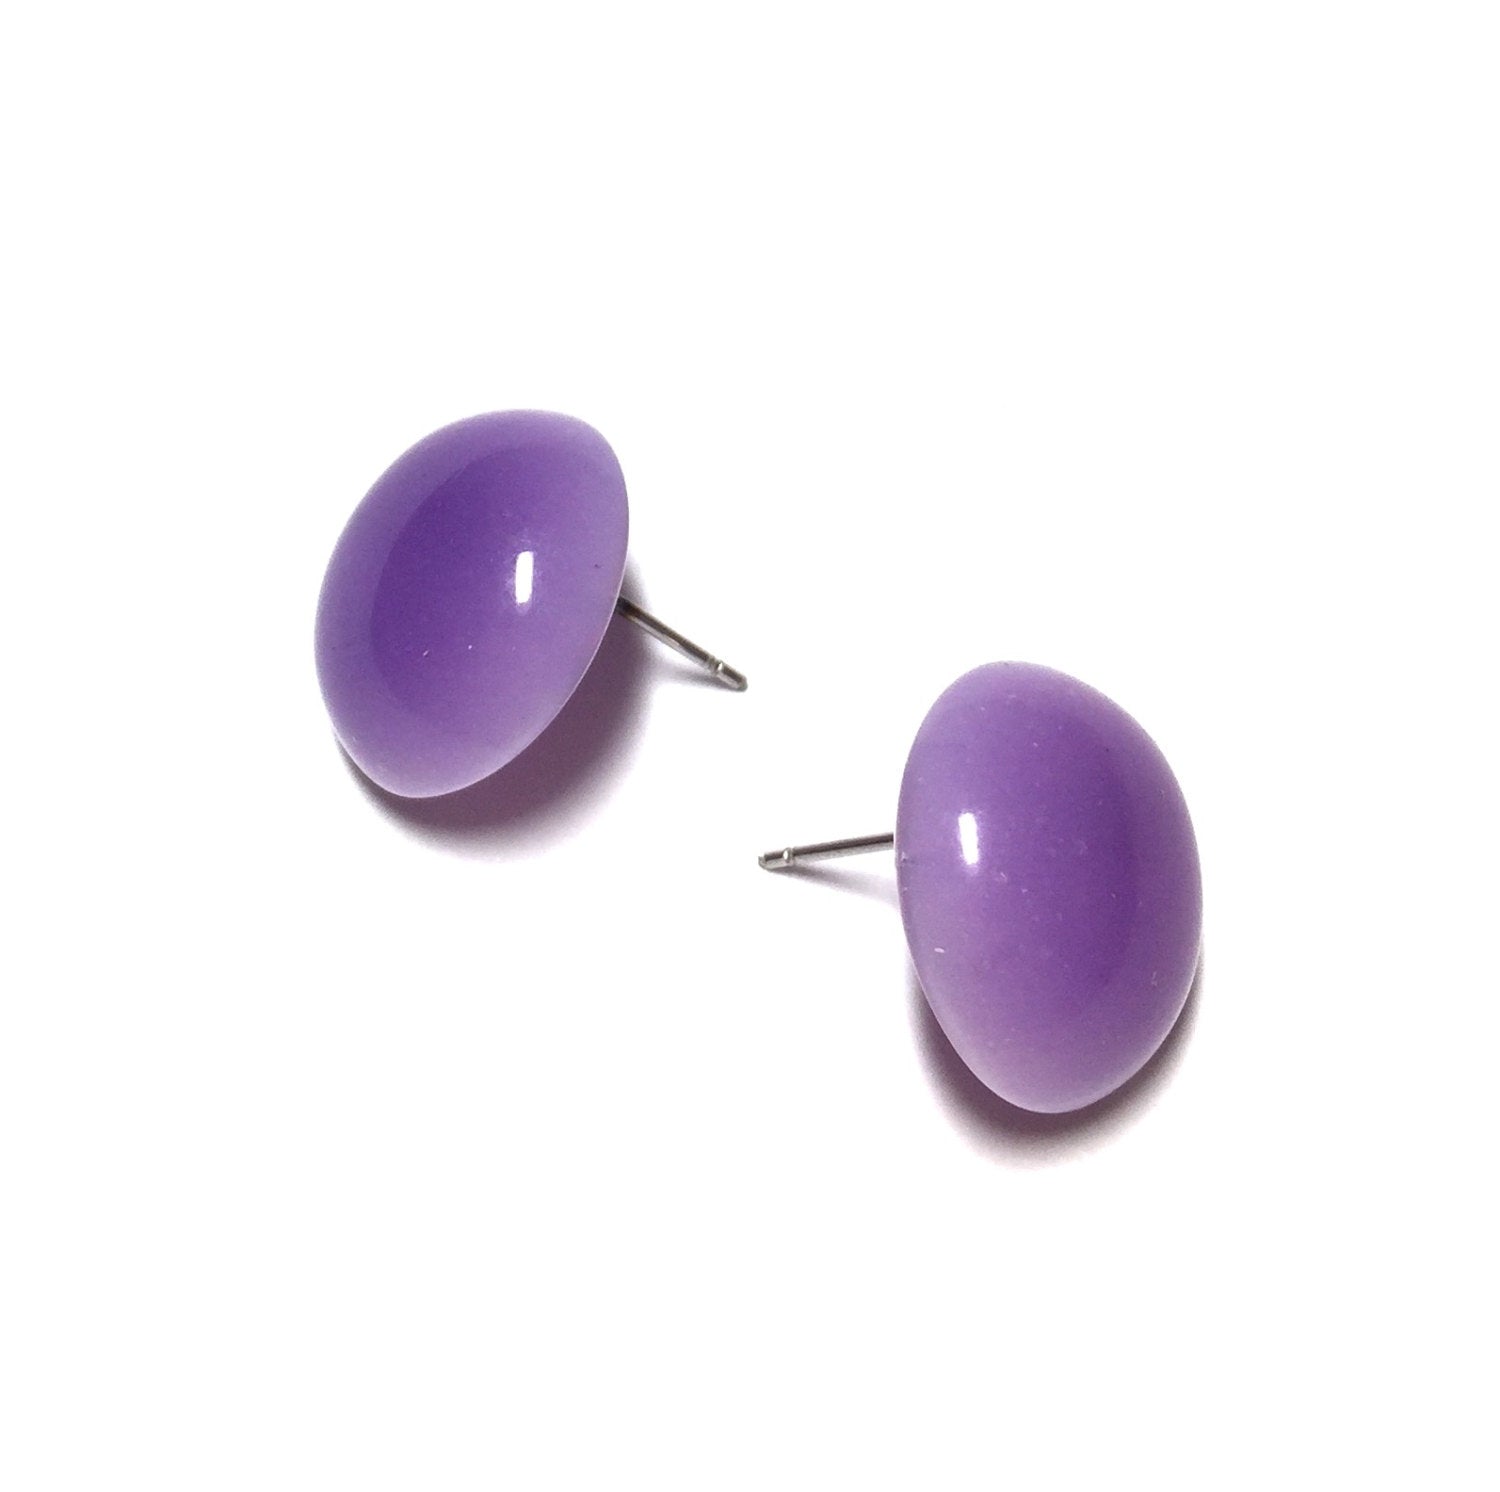 vintage style purple earrings